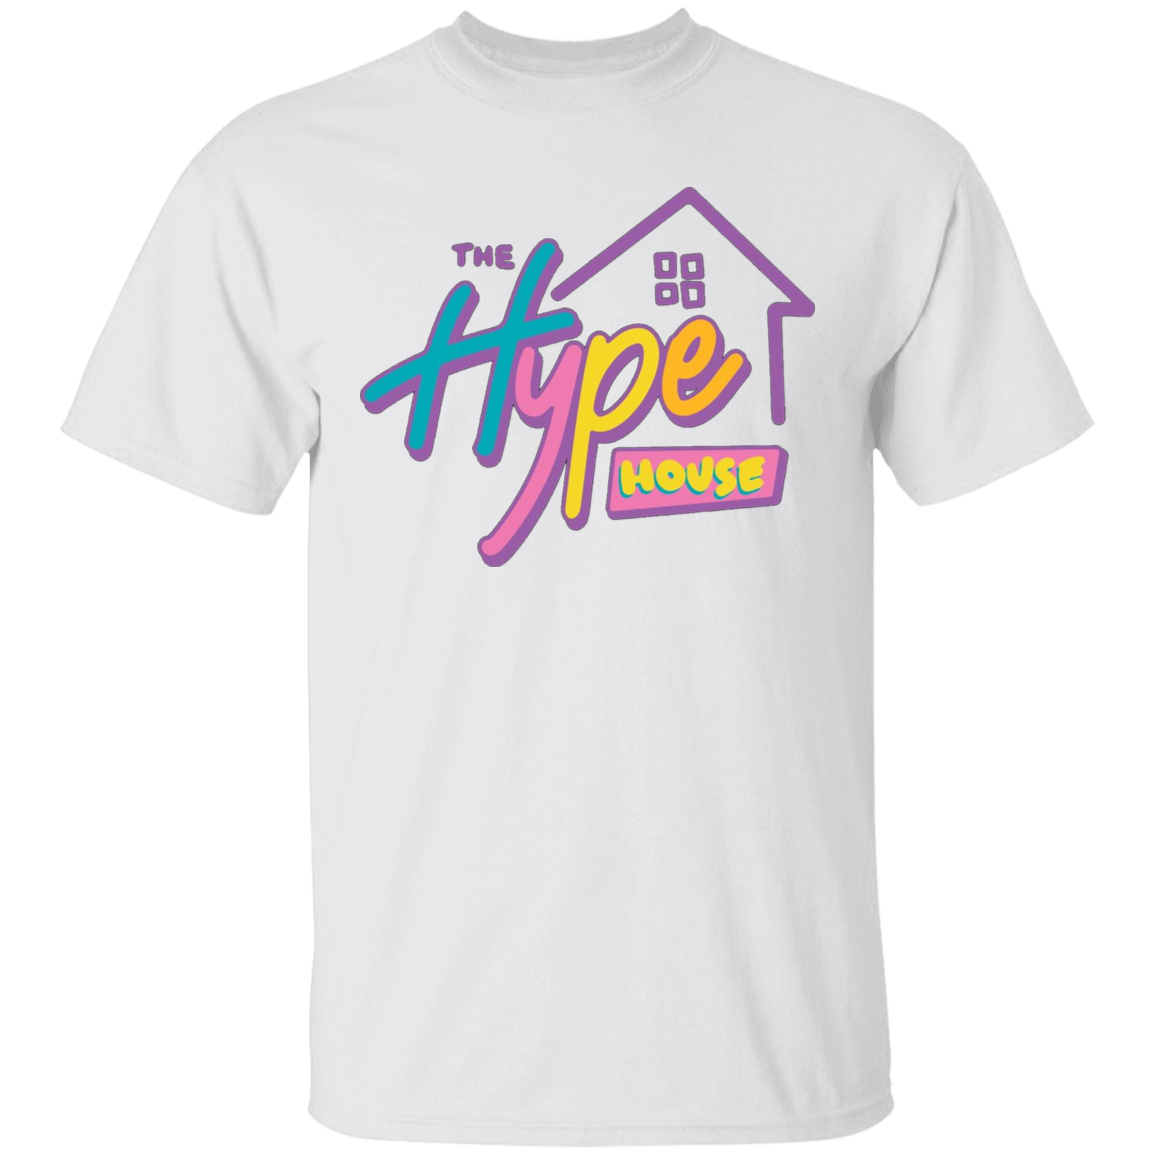 hype house address